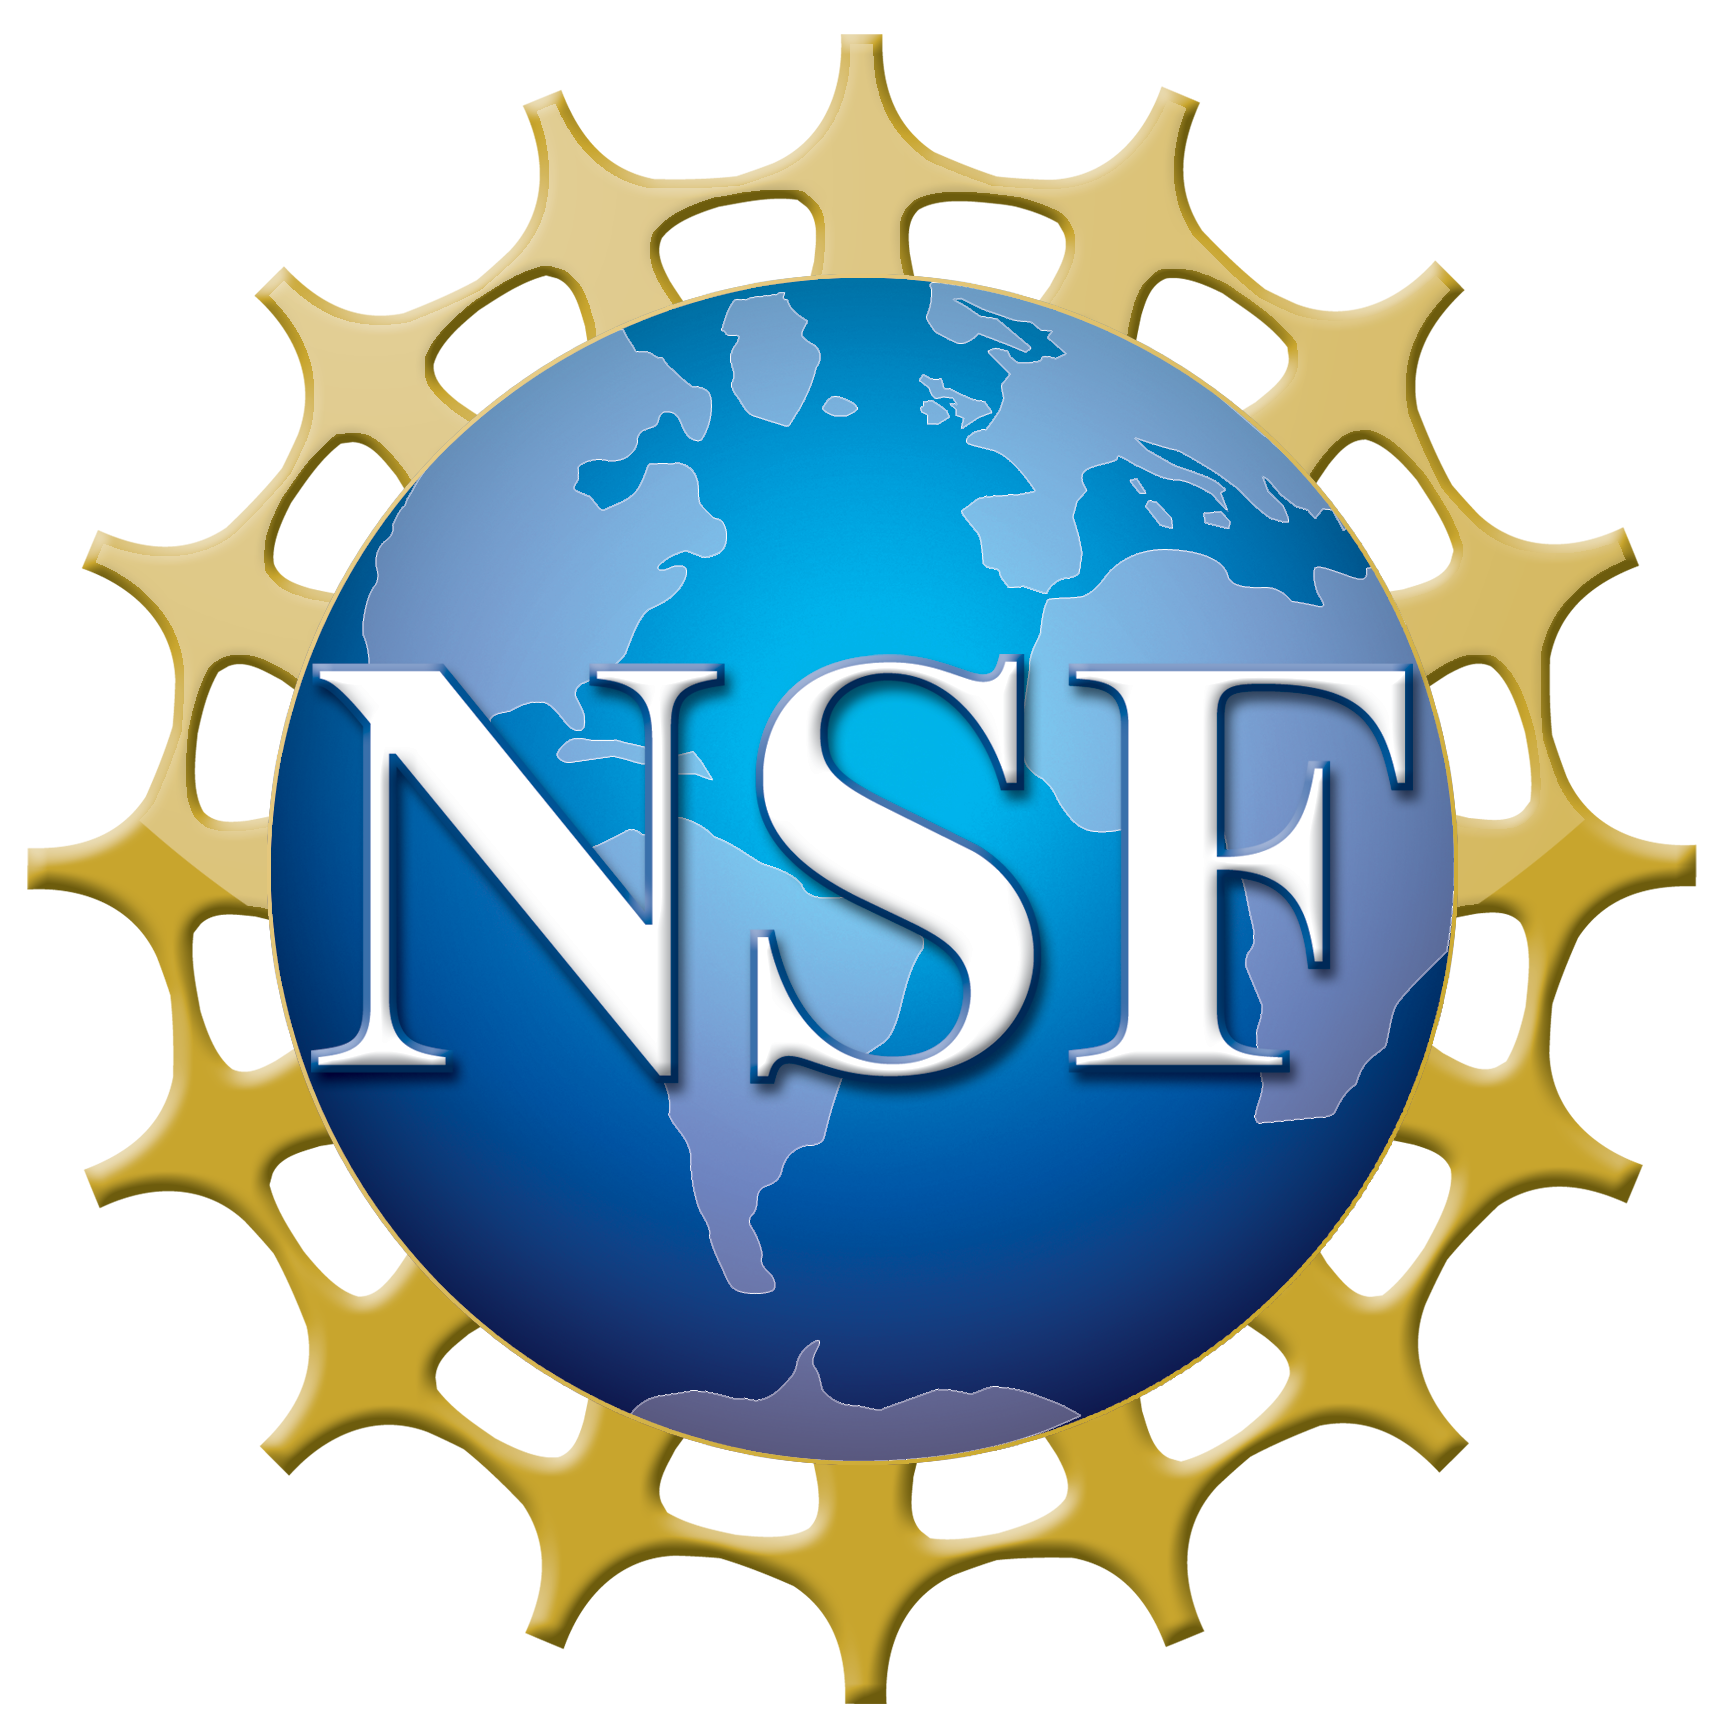 NSF 4 Color bitmap Logo